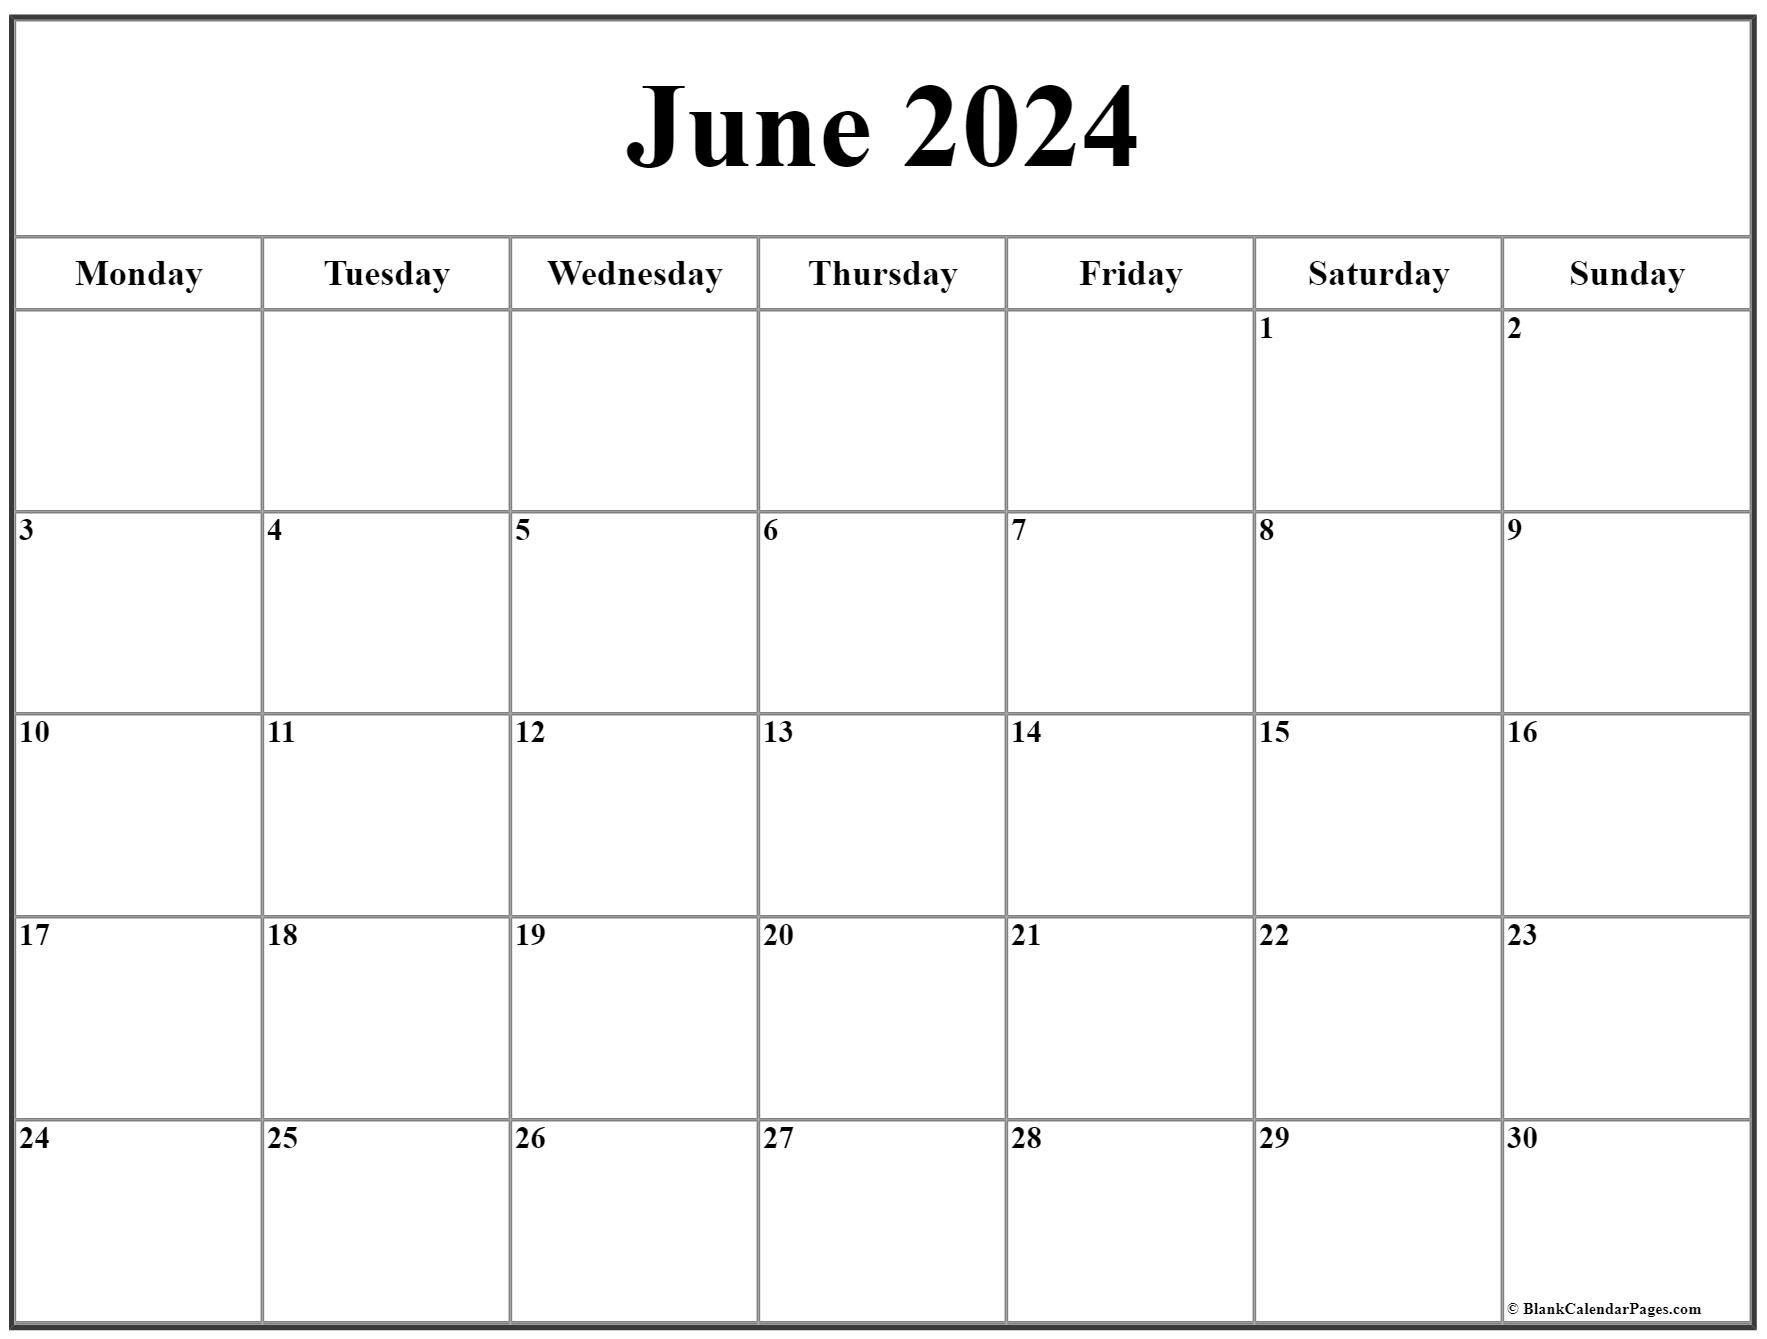 June 2024 Monday Calendar | Monday To Sunday for June 2024 Printable Calendar